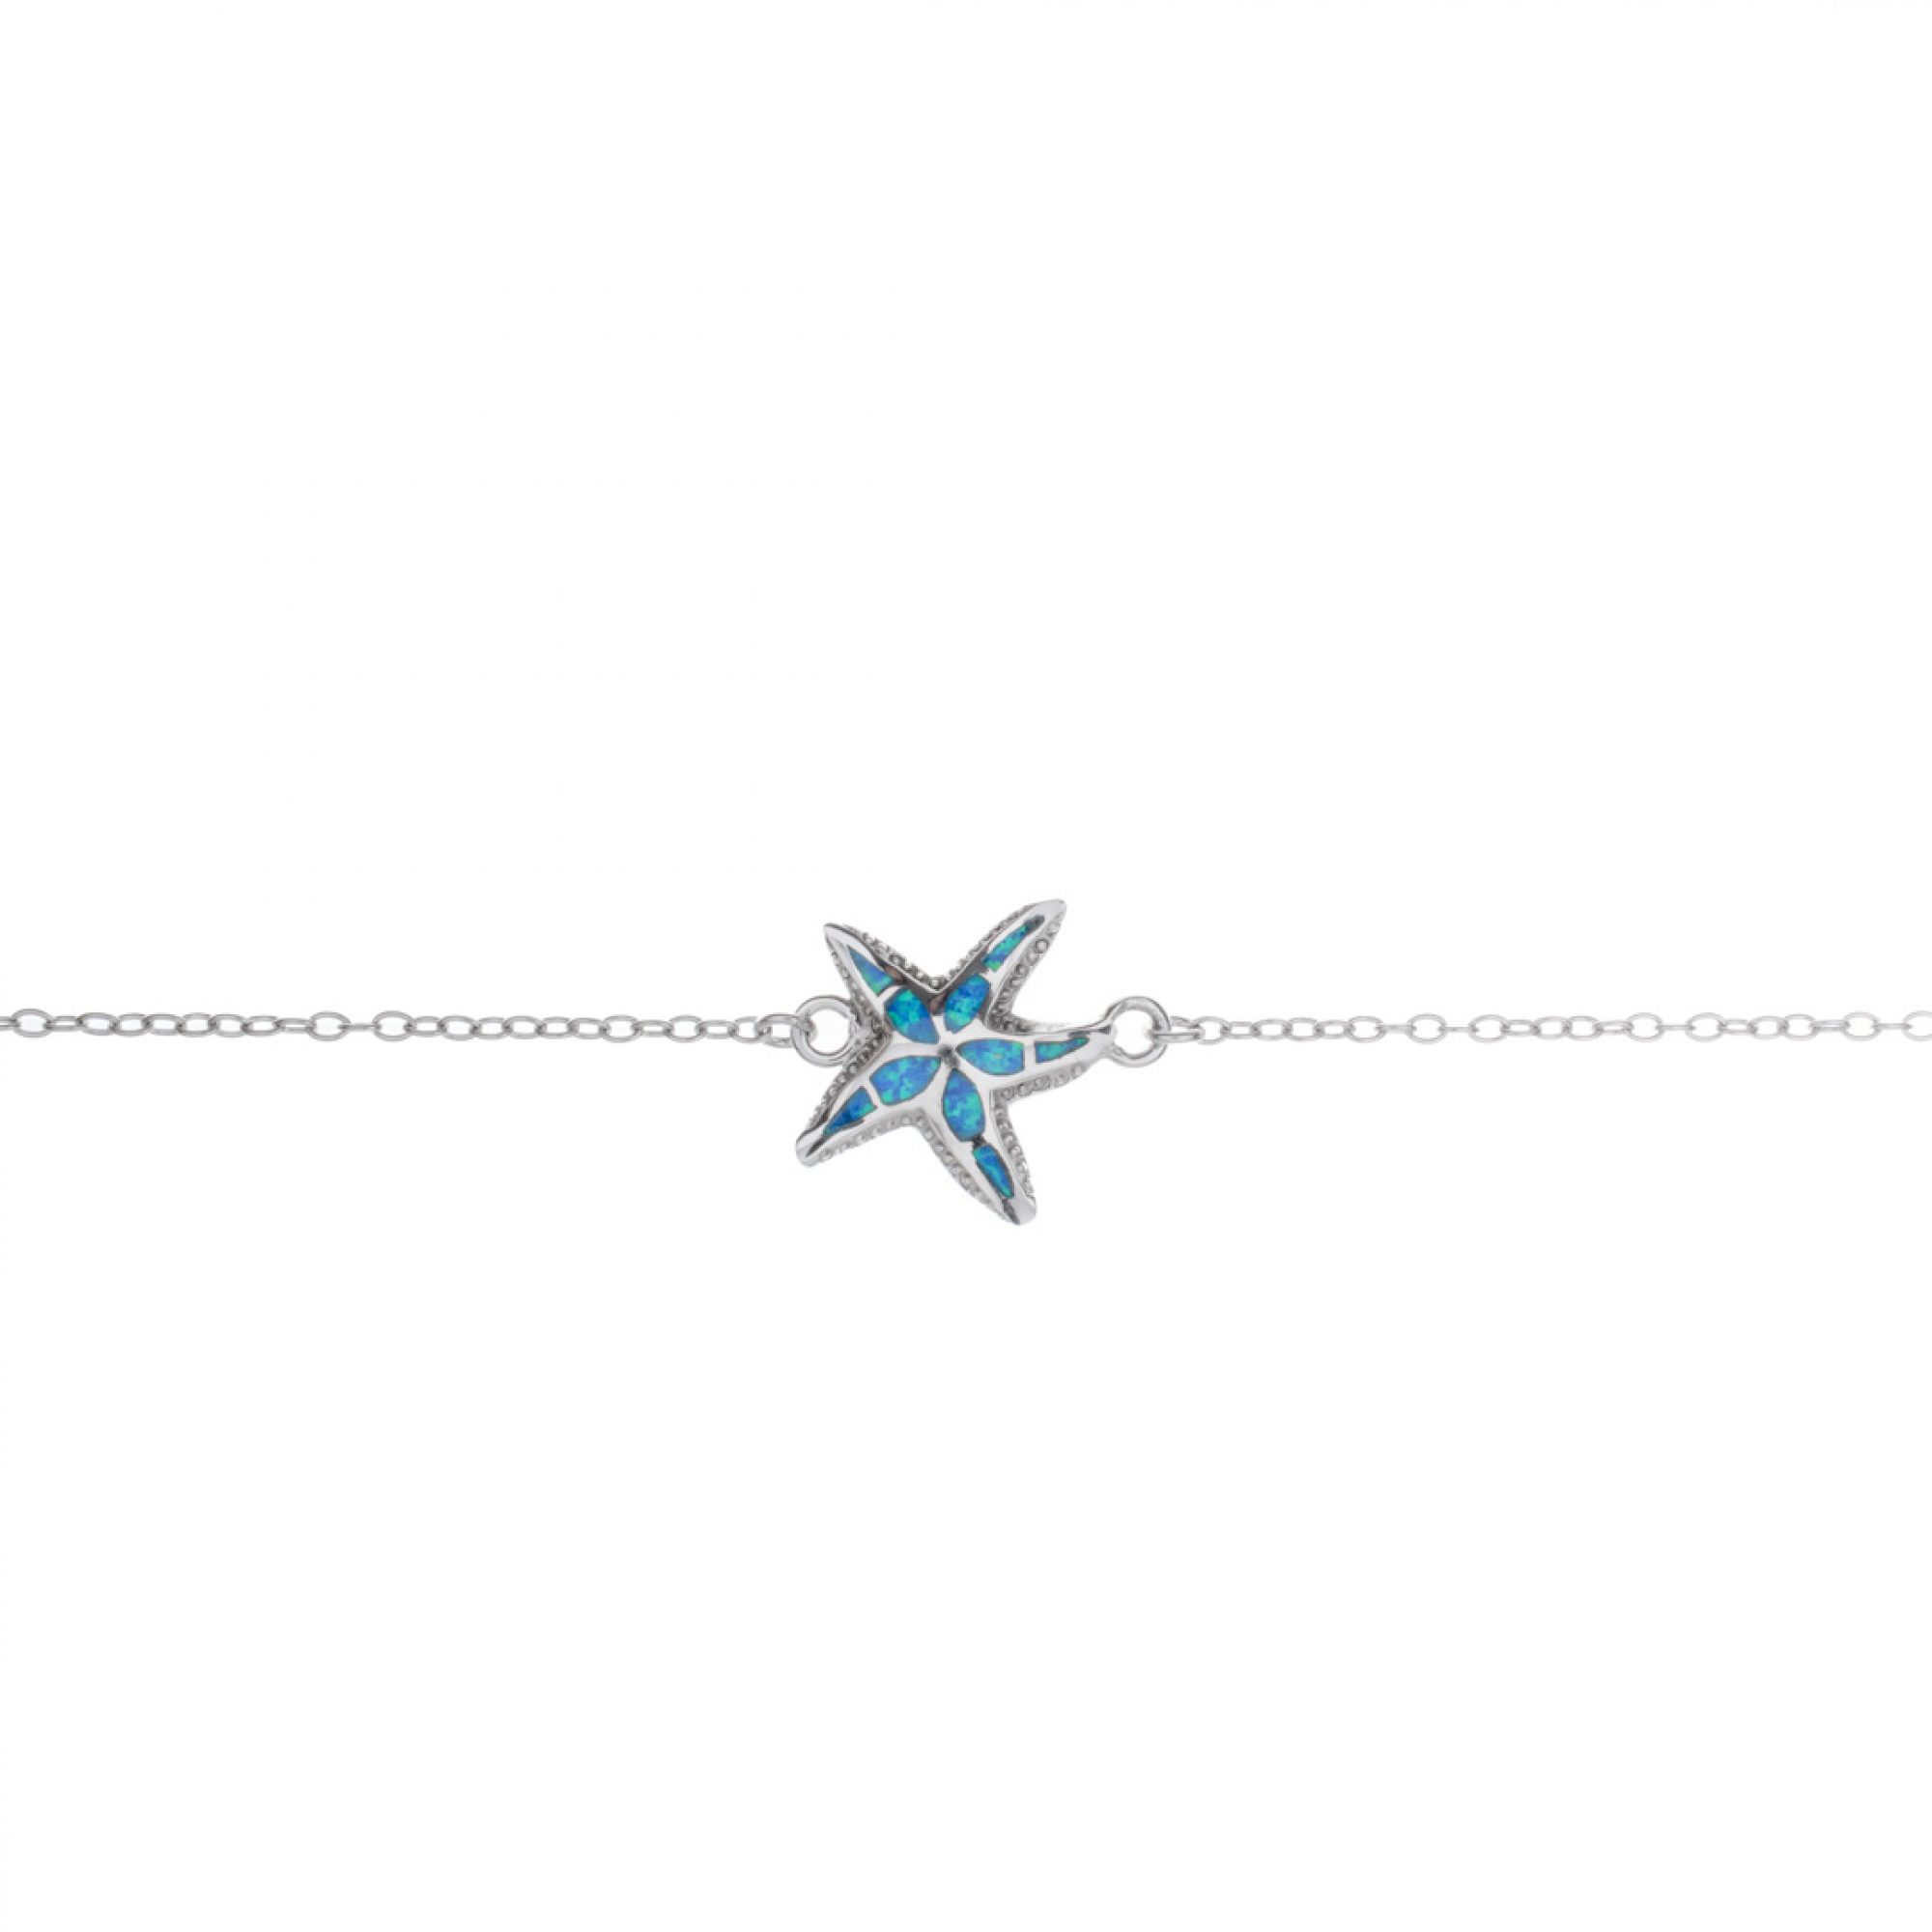 Starfish bracelet with opal stones